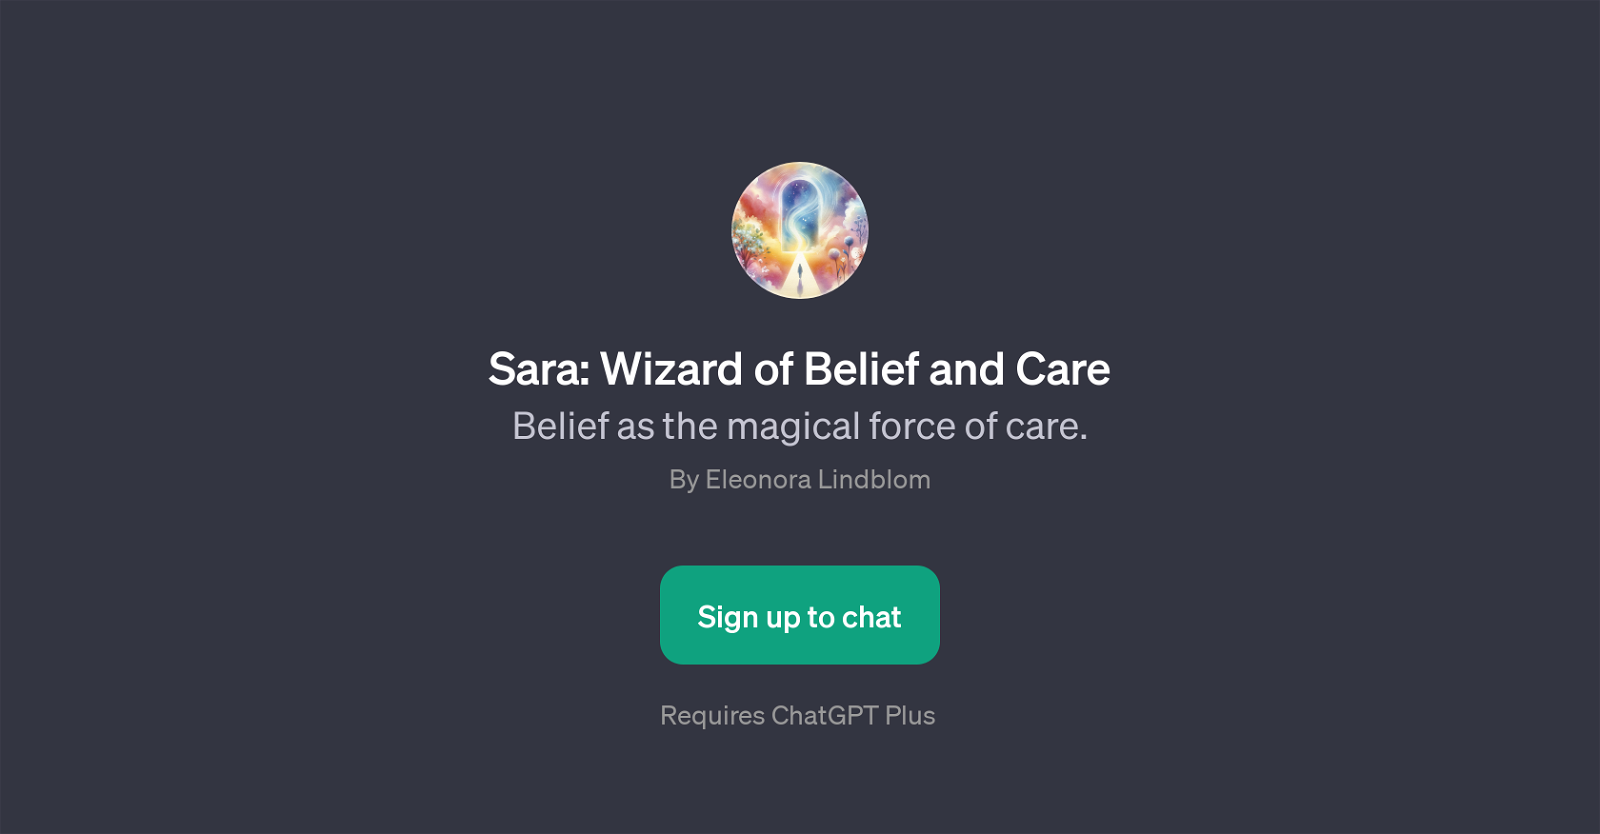 Sara: Wizard of Belief and Care website